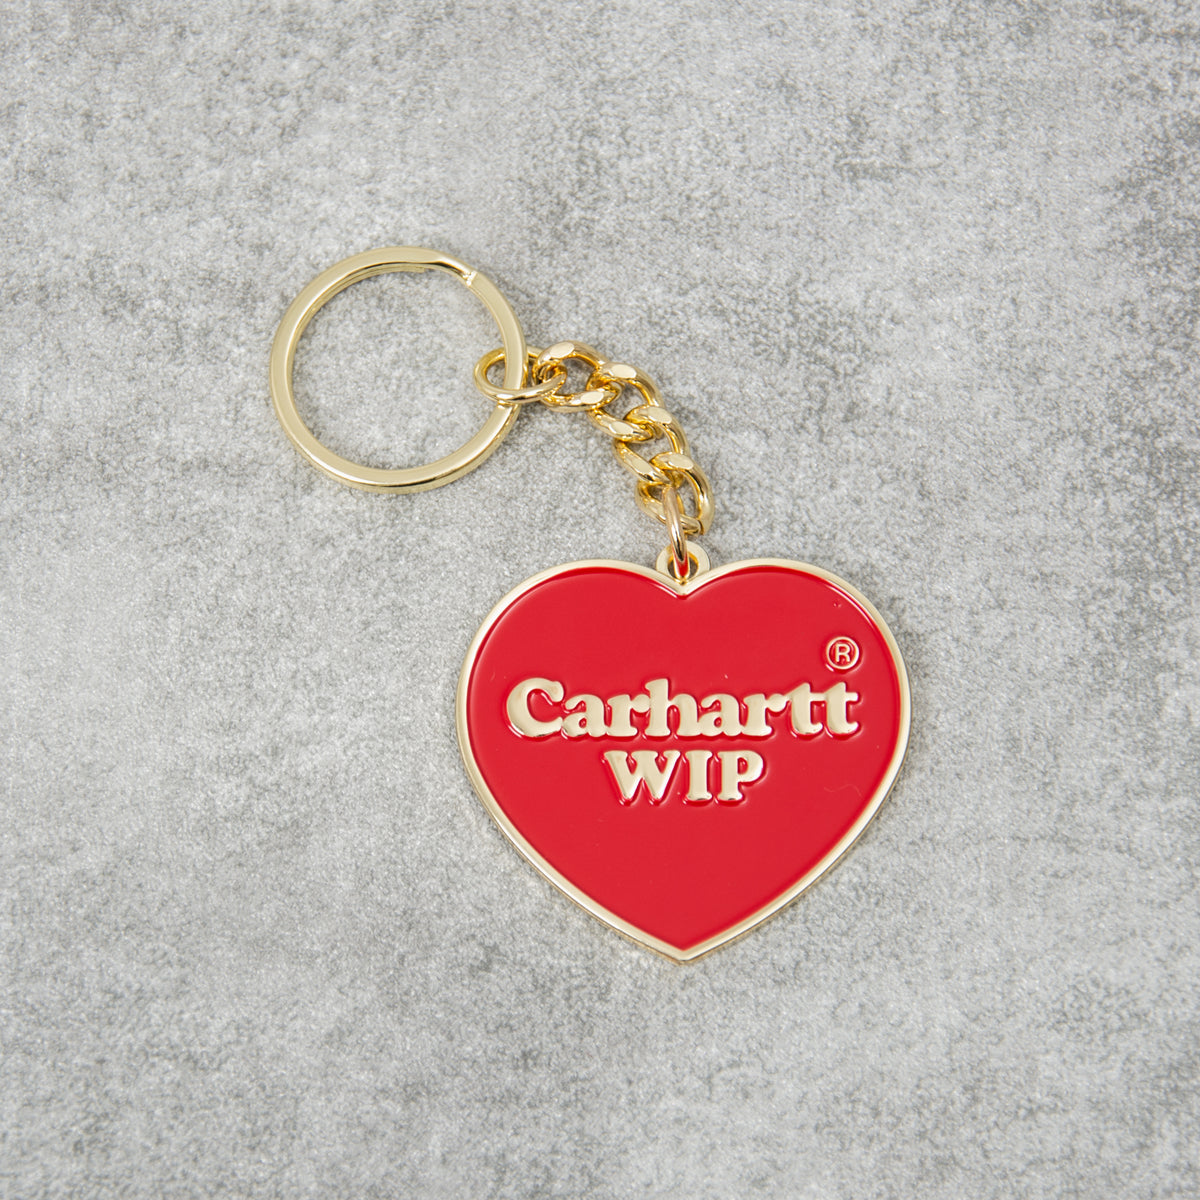 Carhartt WIP Heart Keychain - Red - One Size - Unisex